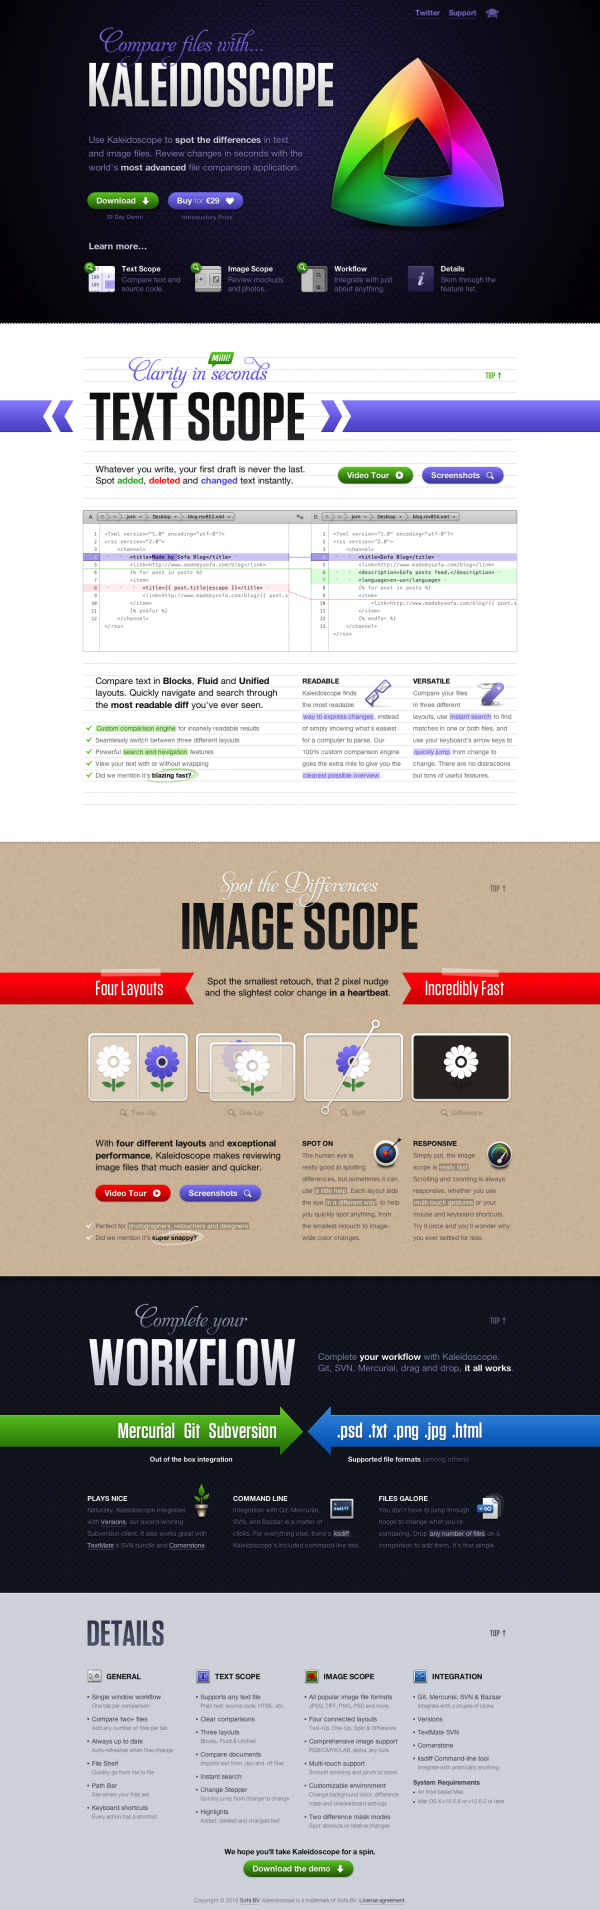 Kaleidoscope — File comparison for Mac